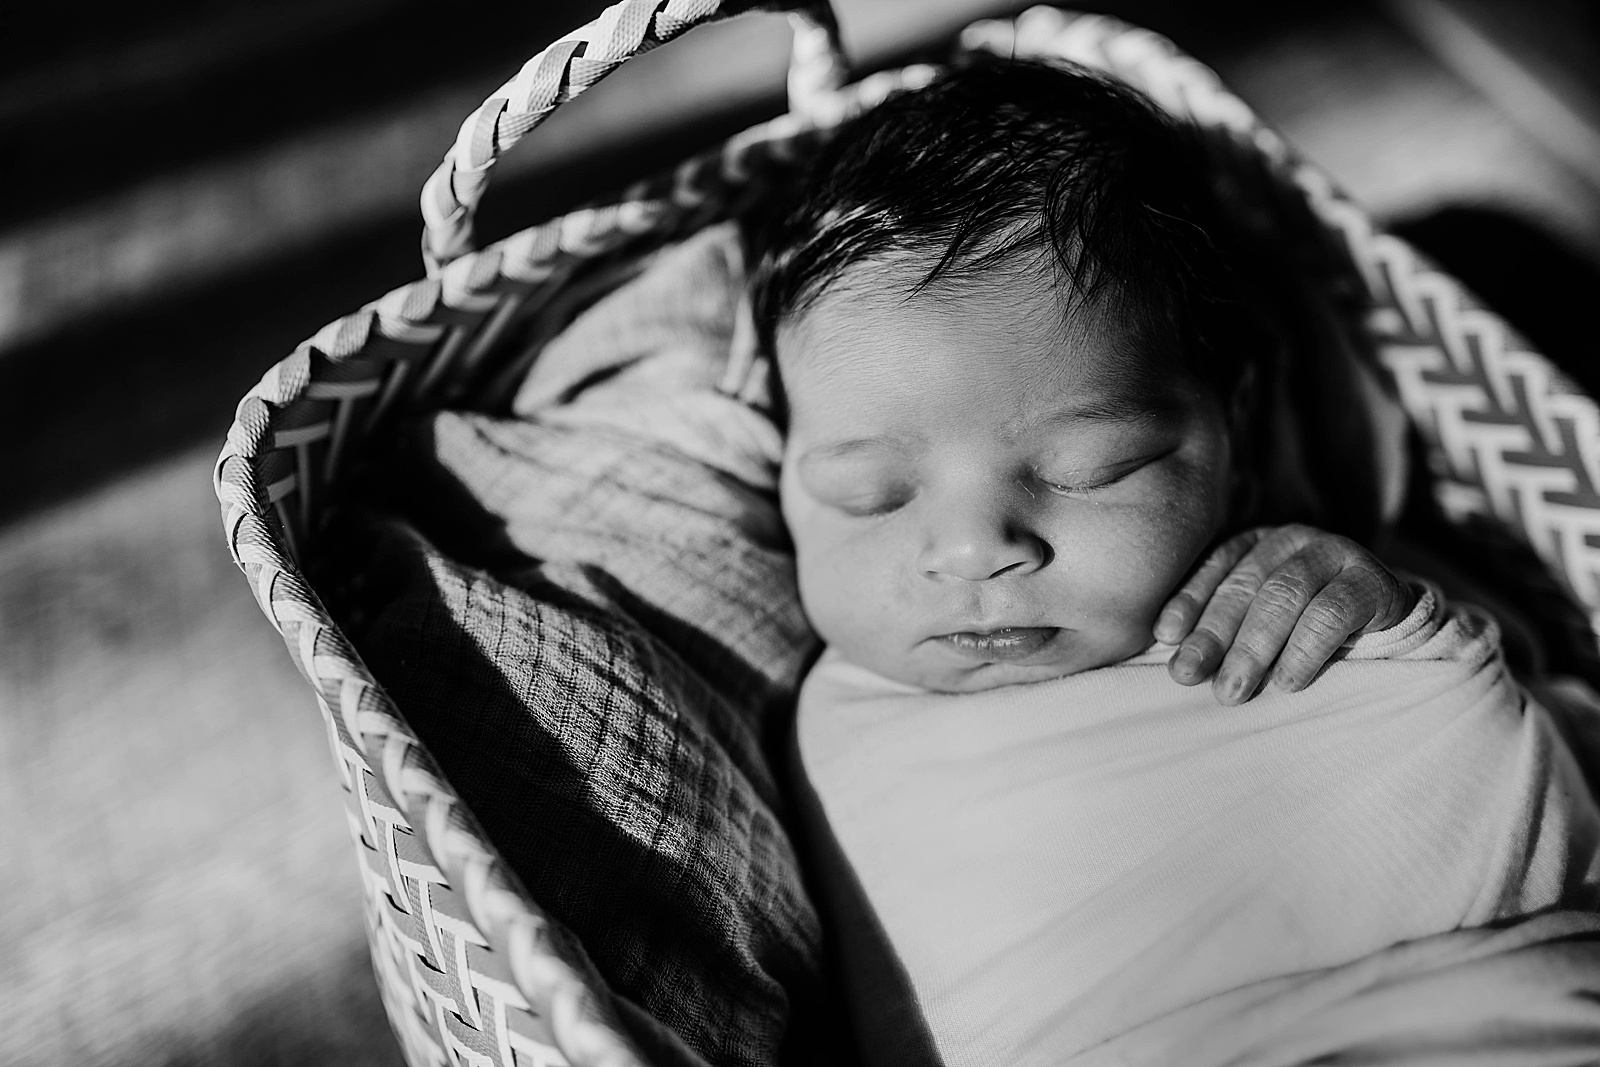 South Florida newborn photos by West Palm Beach newborn photographer, Krystal Capone Photography